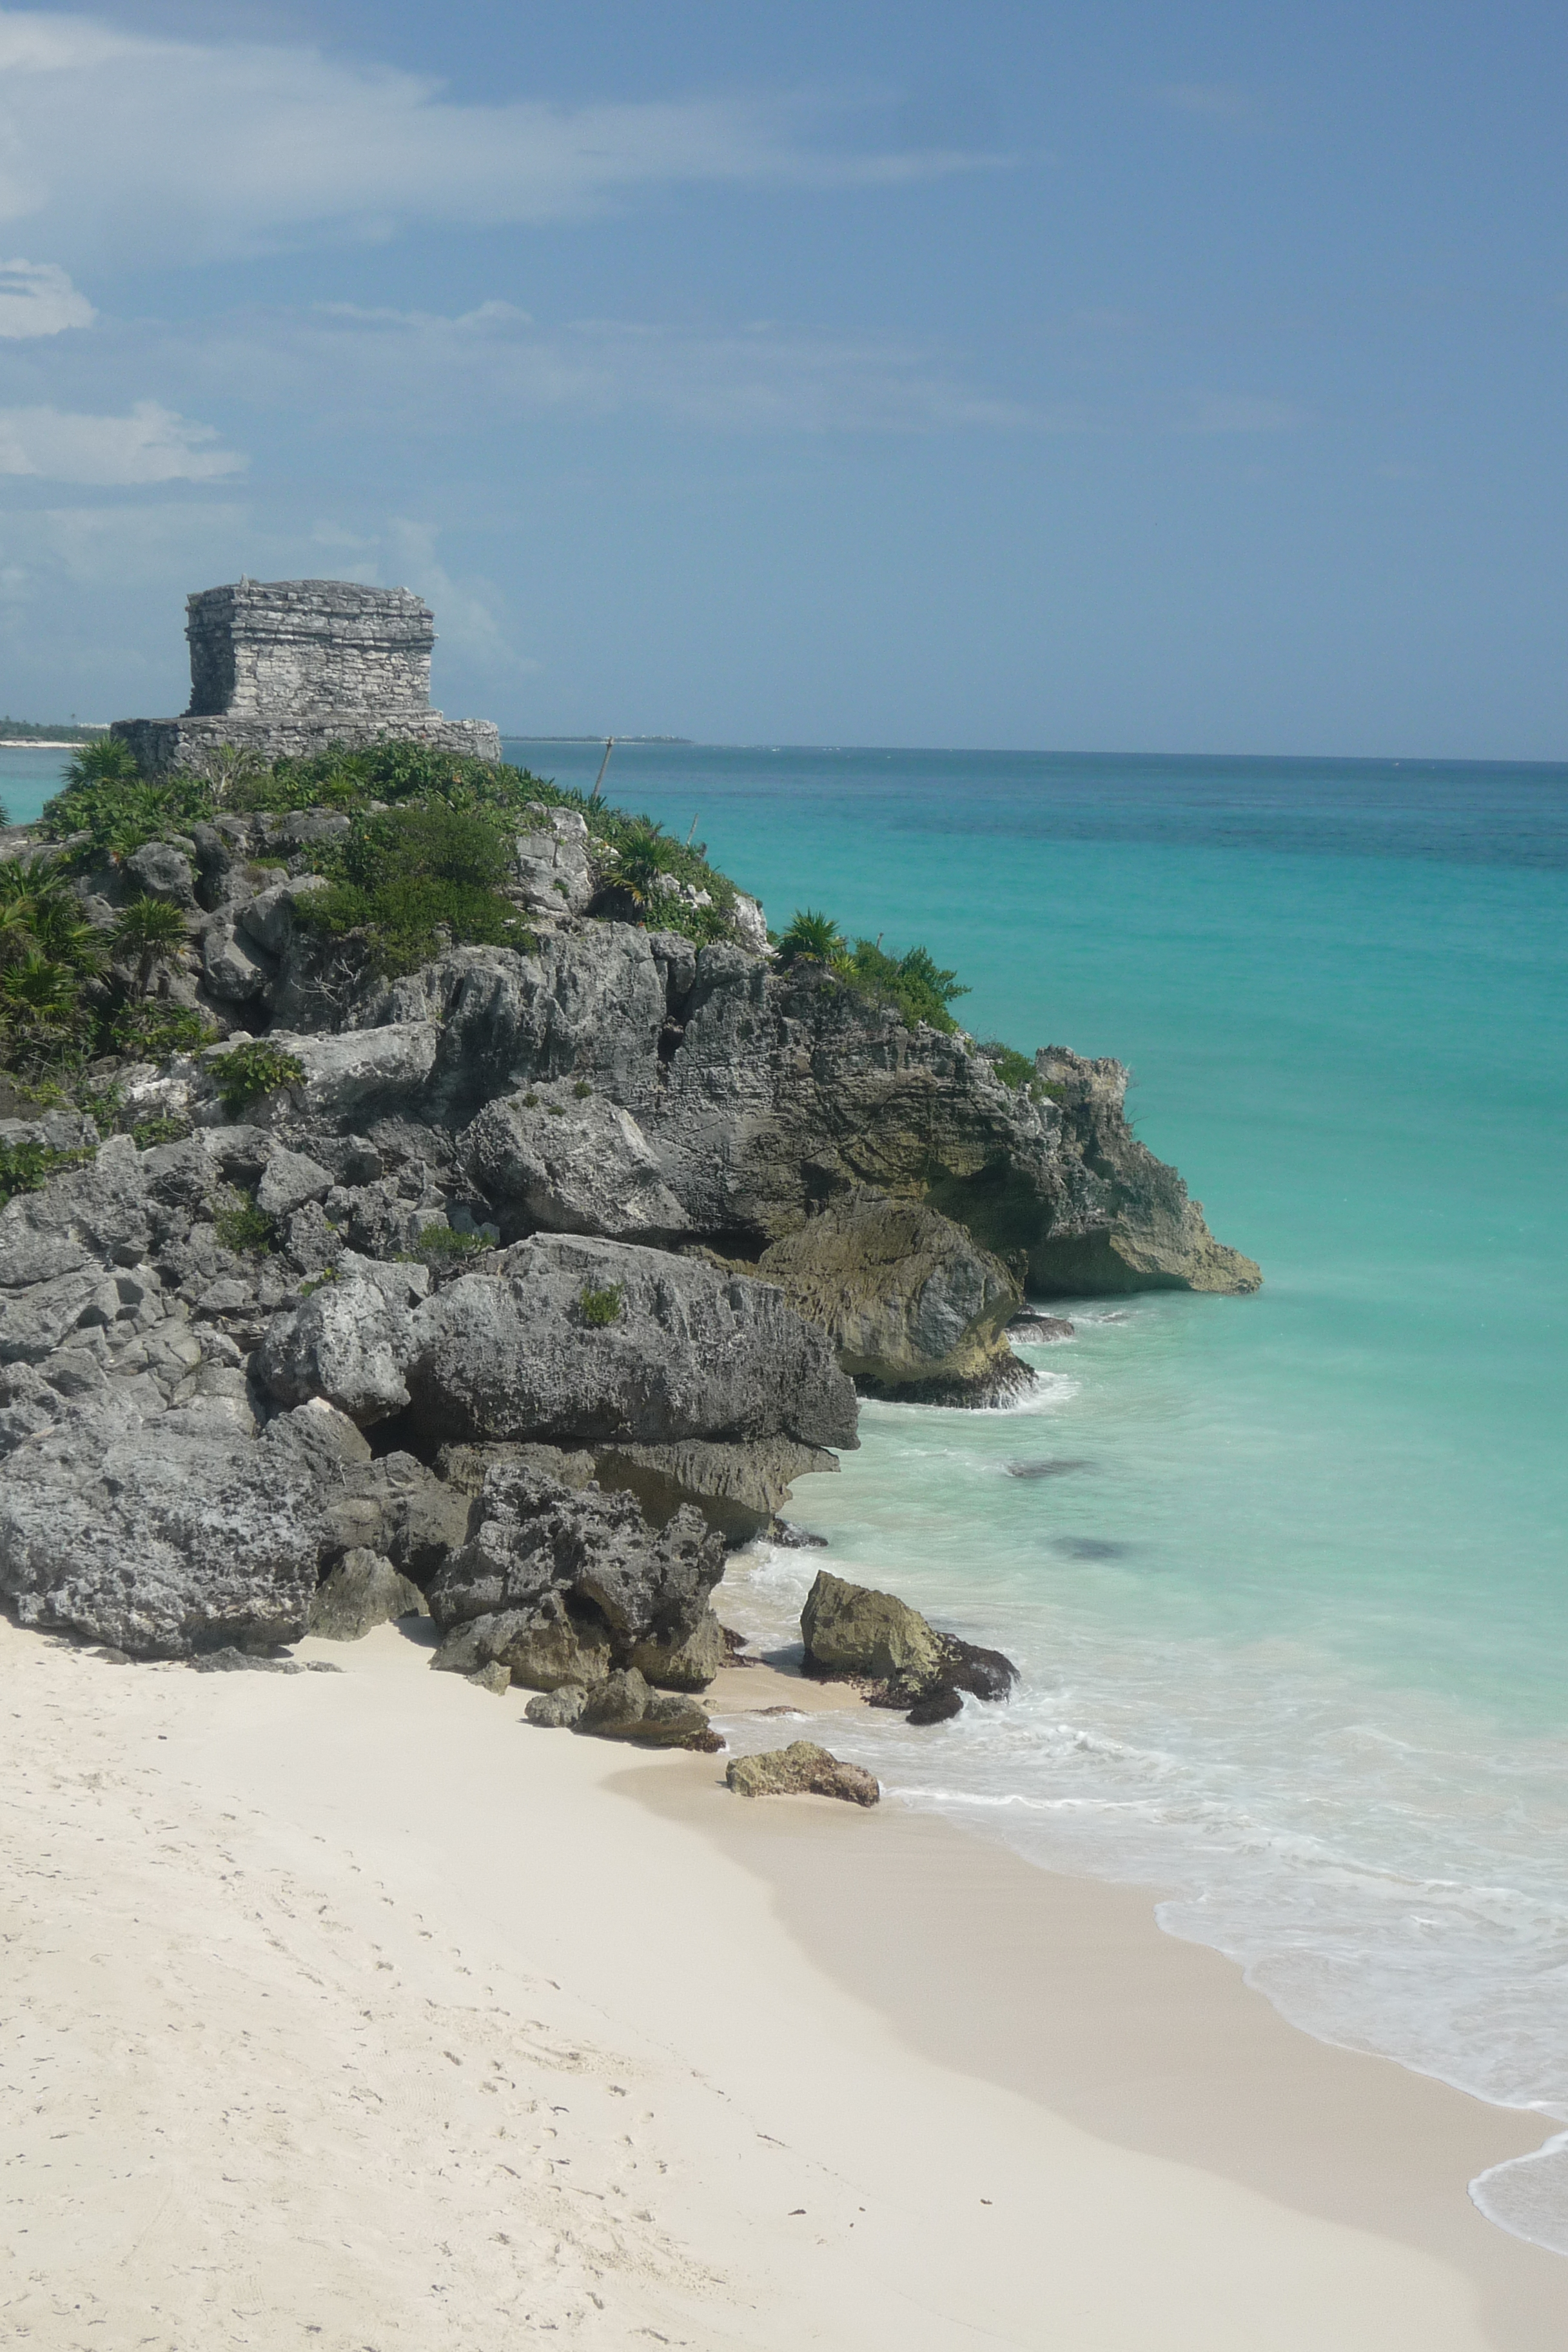 File:Tulum, Quintana Roo, MX.JPG - Wikimedia Commons